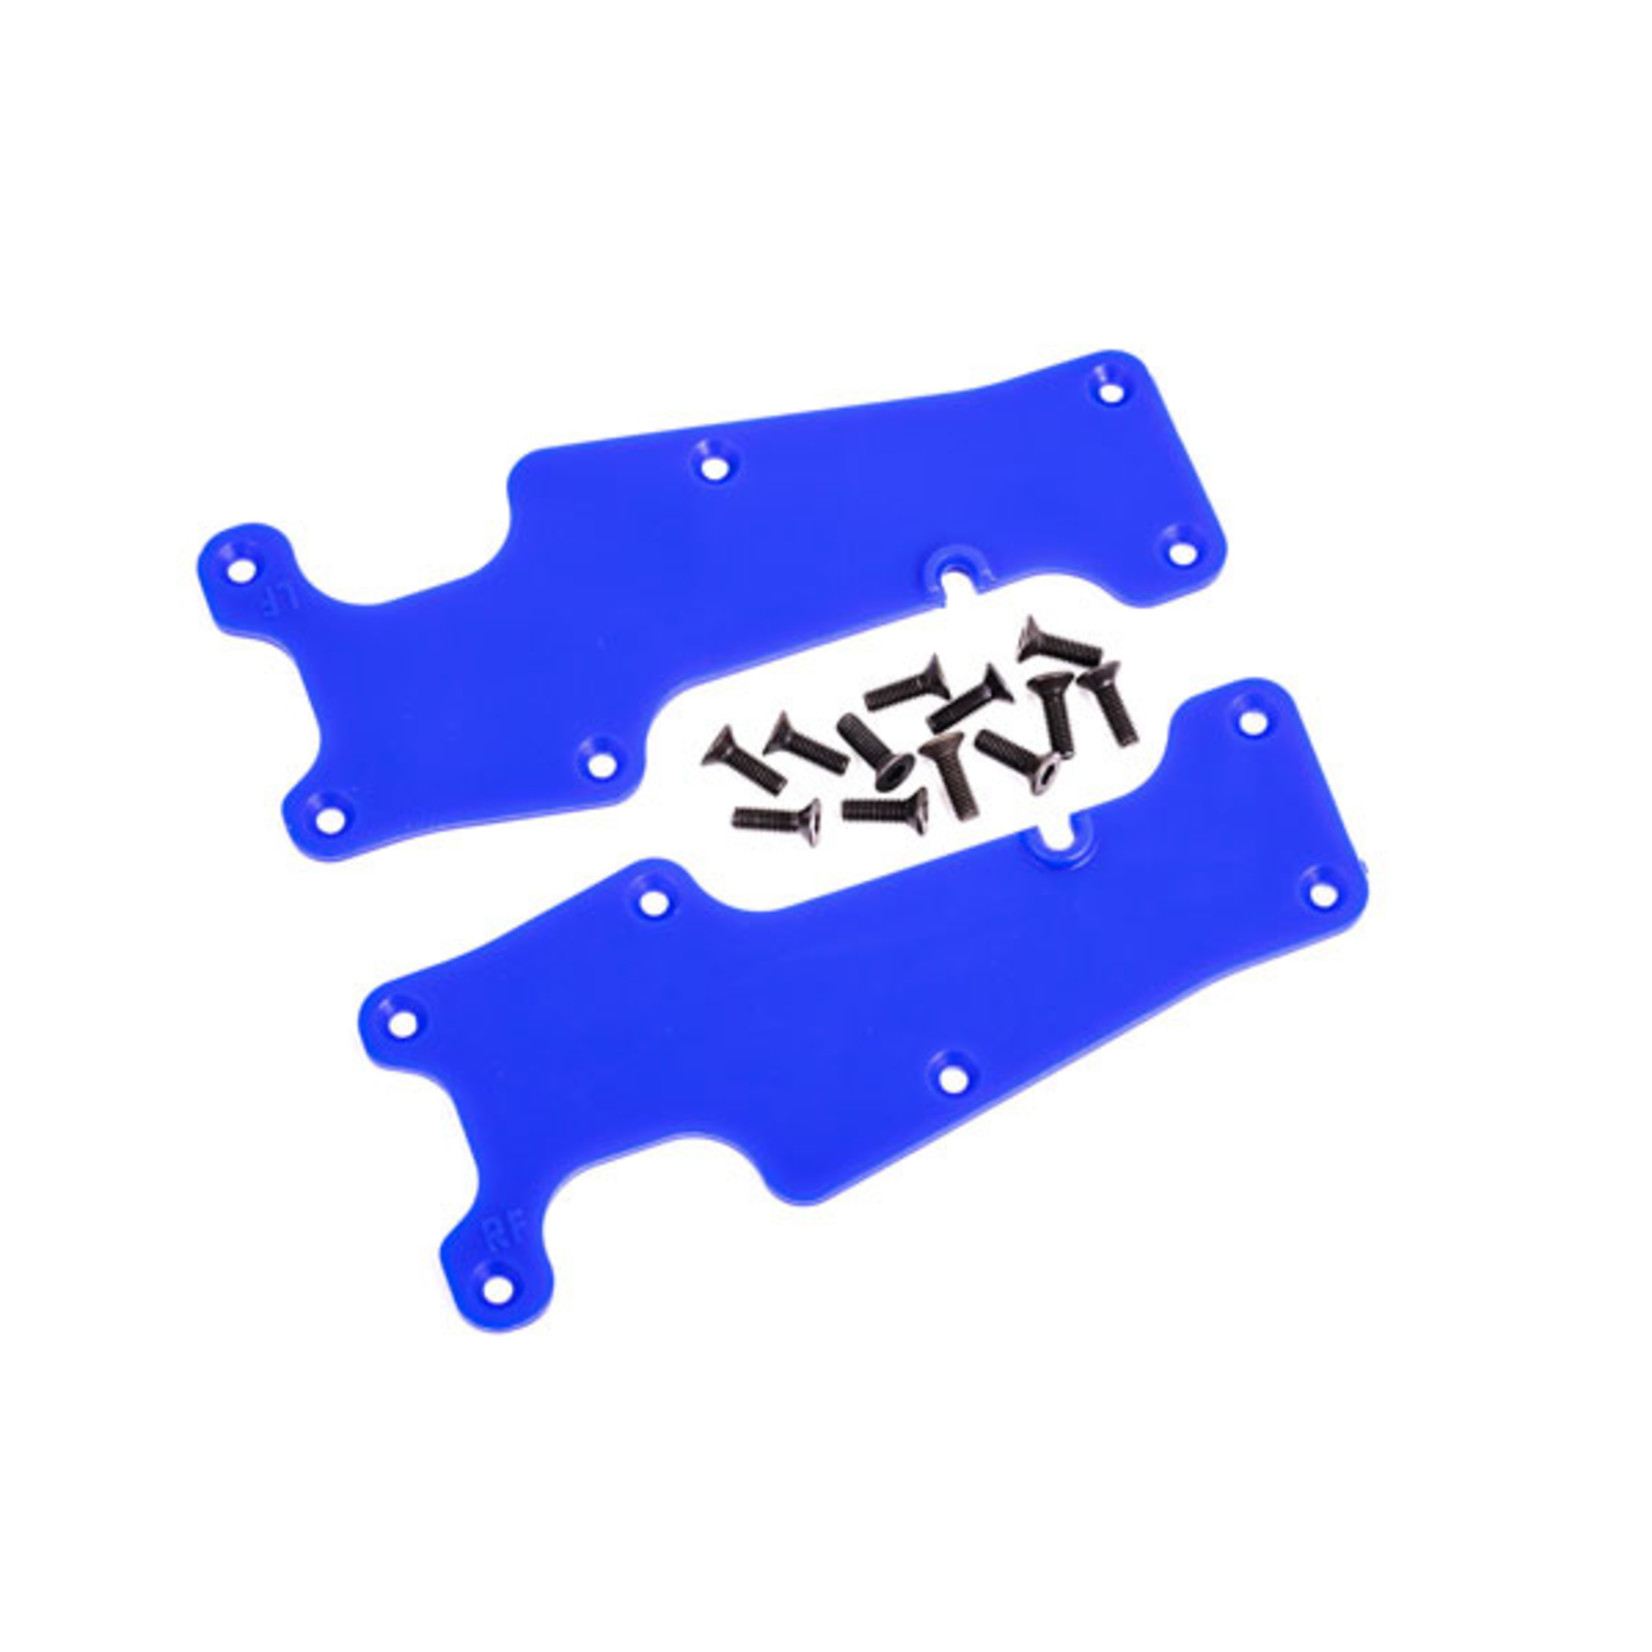 Traxxas 9633X - Suspension arm covers, blue, front (left a